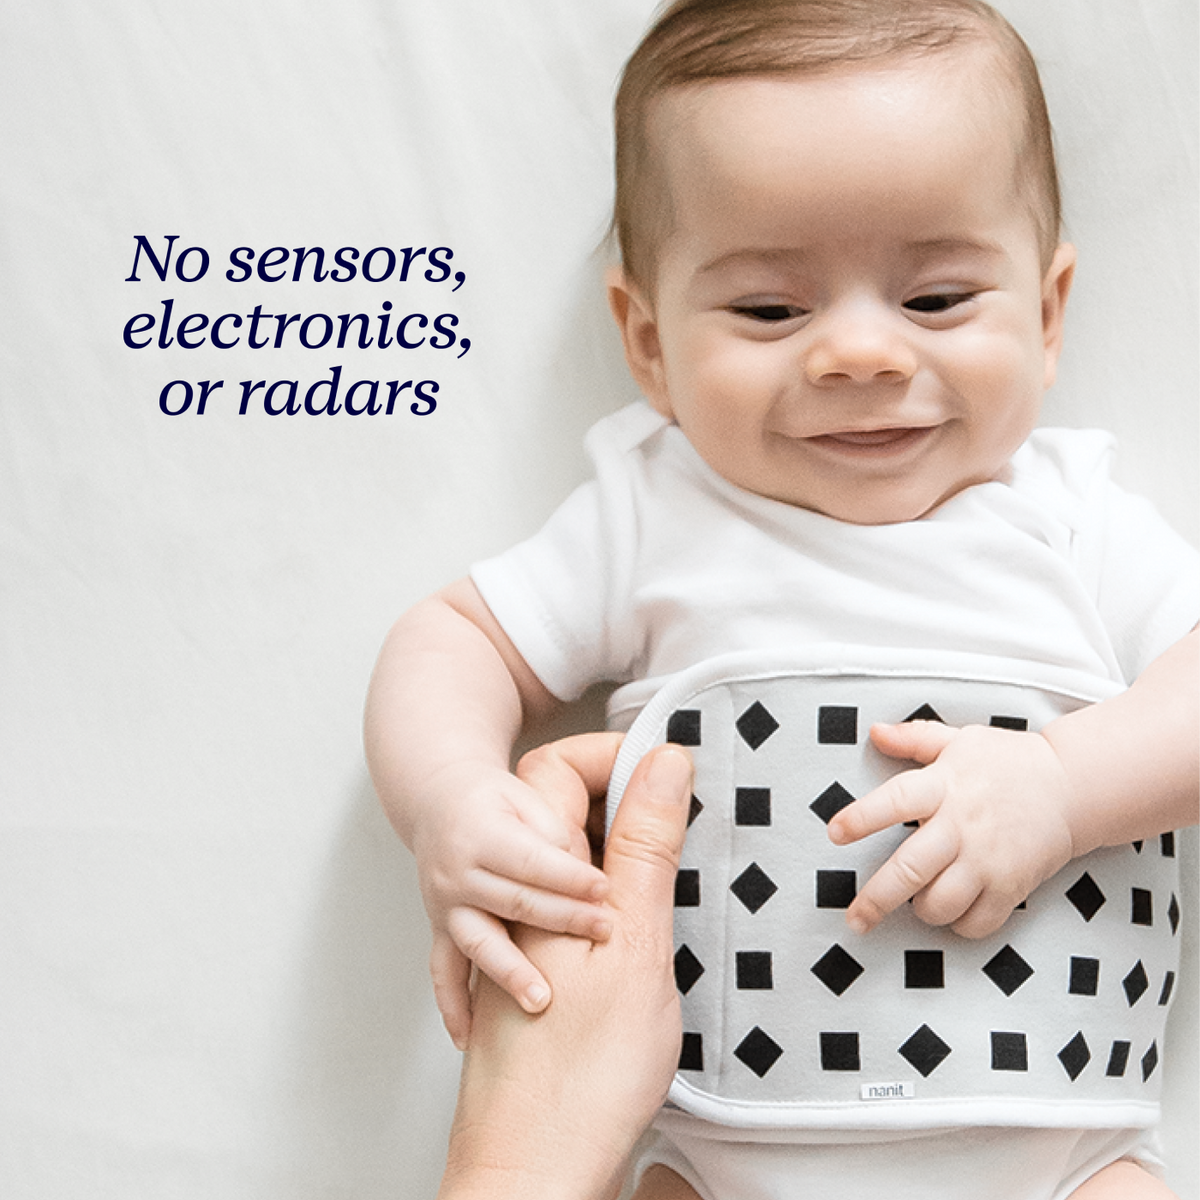 baby wearing breathing band - no sensors, electronics, or radars